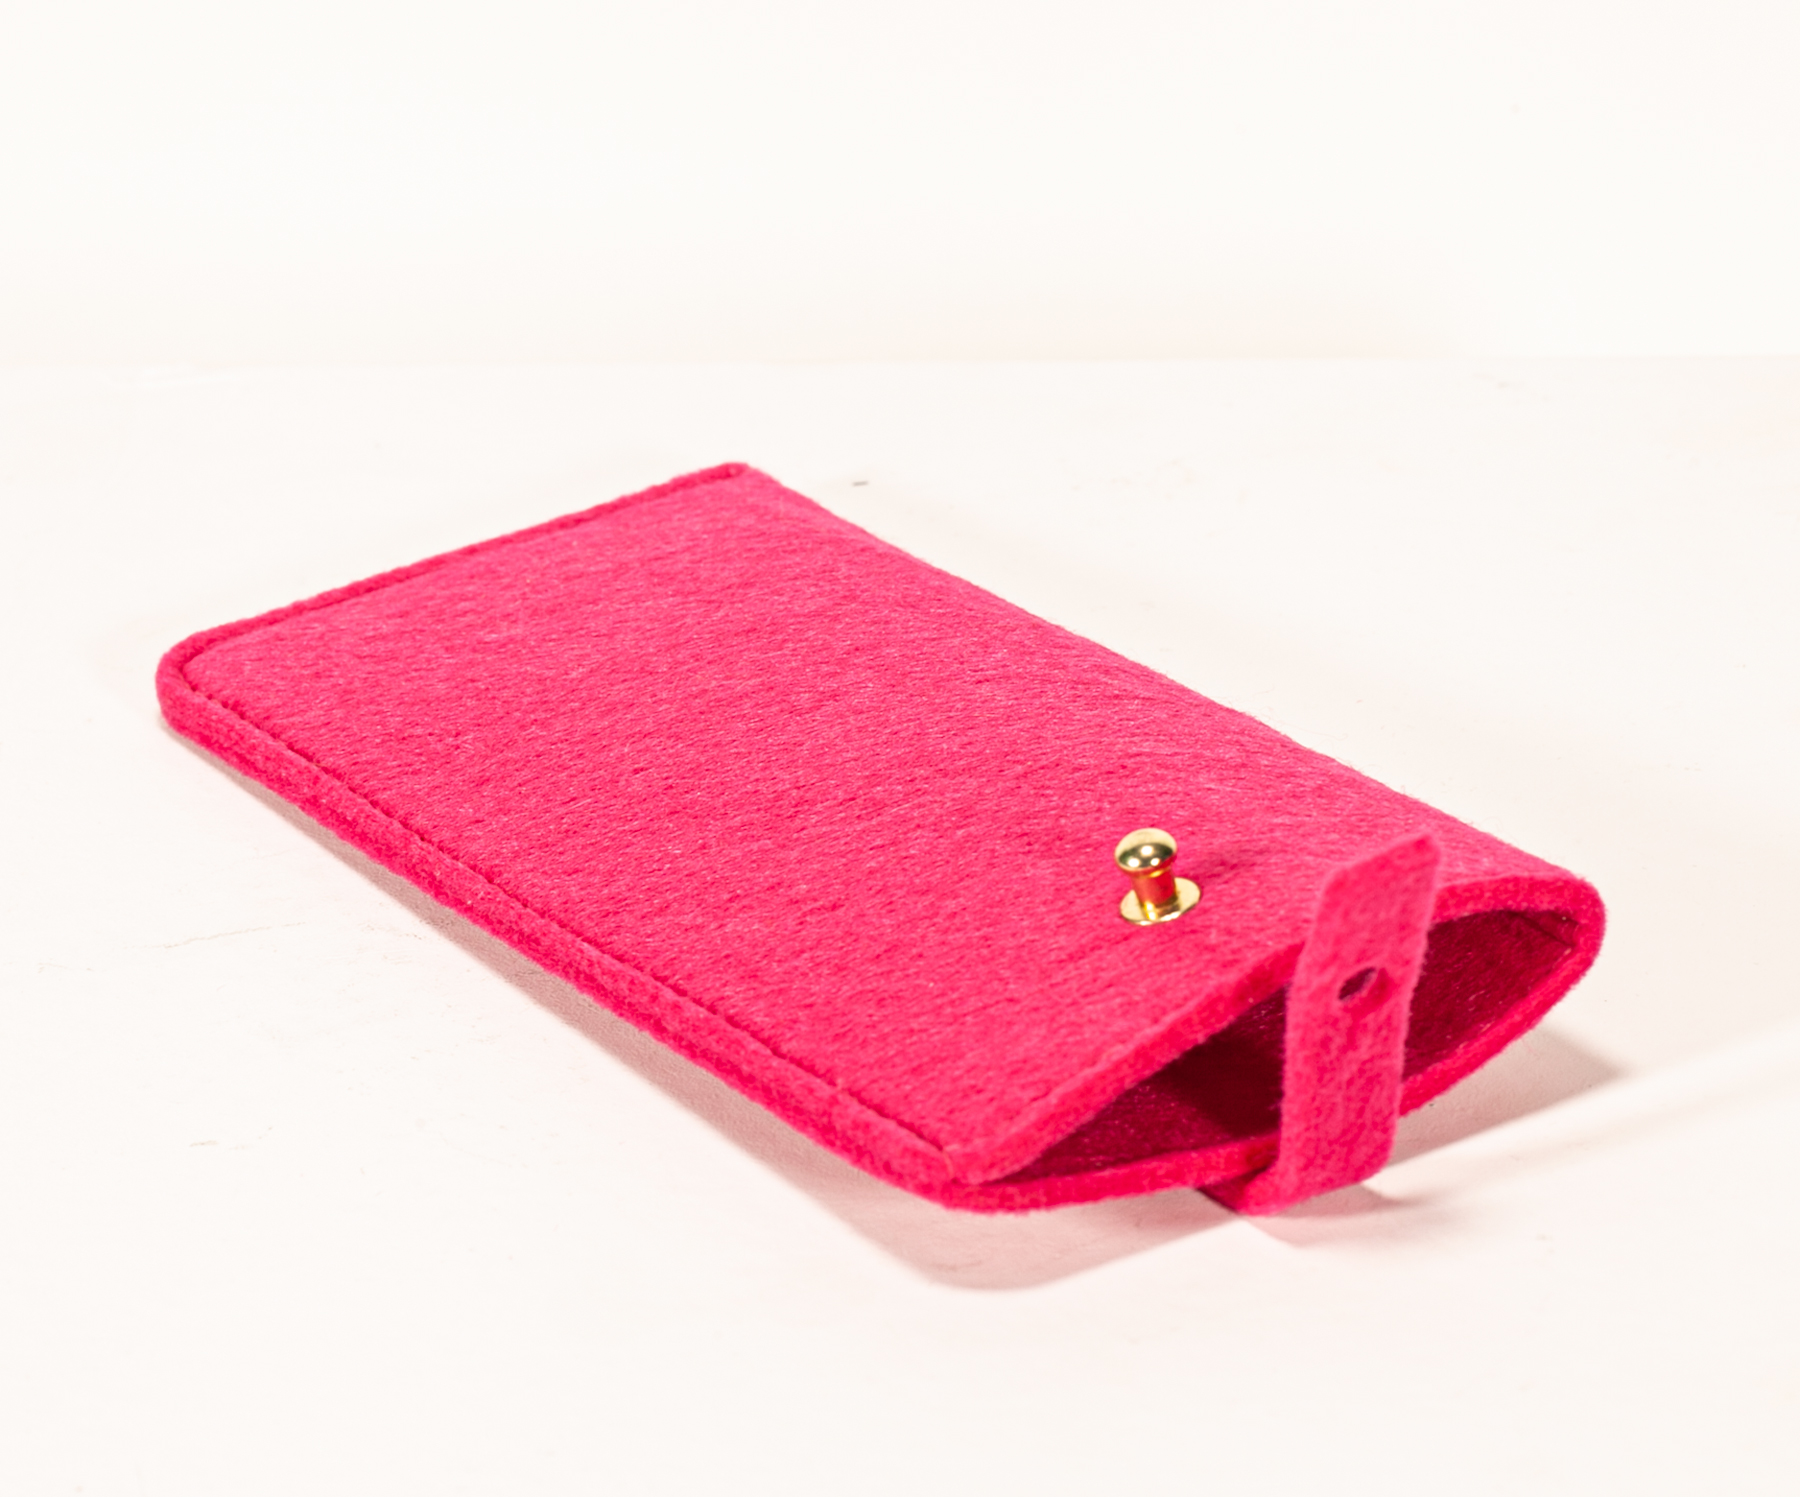 A pink felt glasses leather case, pure handicrafts, exquisite